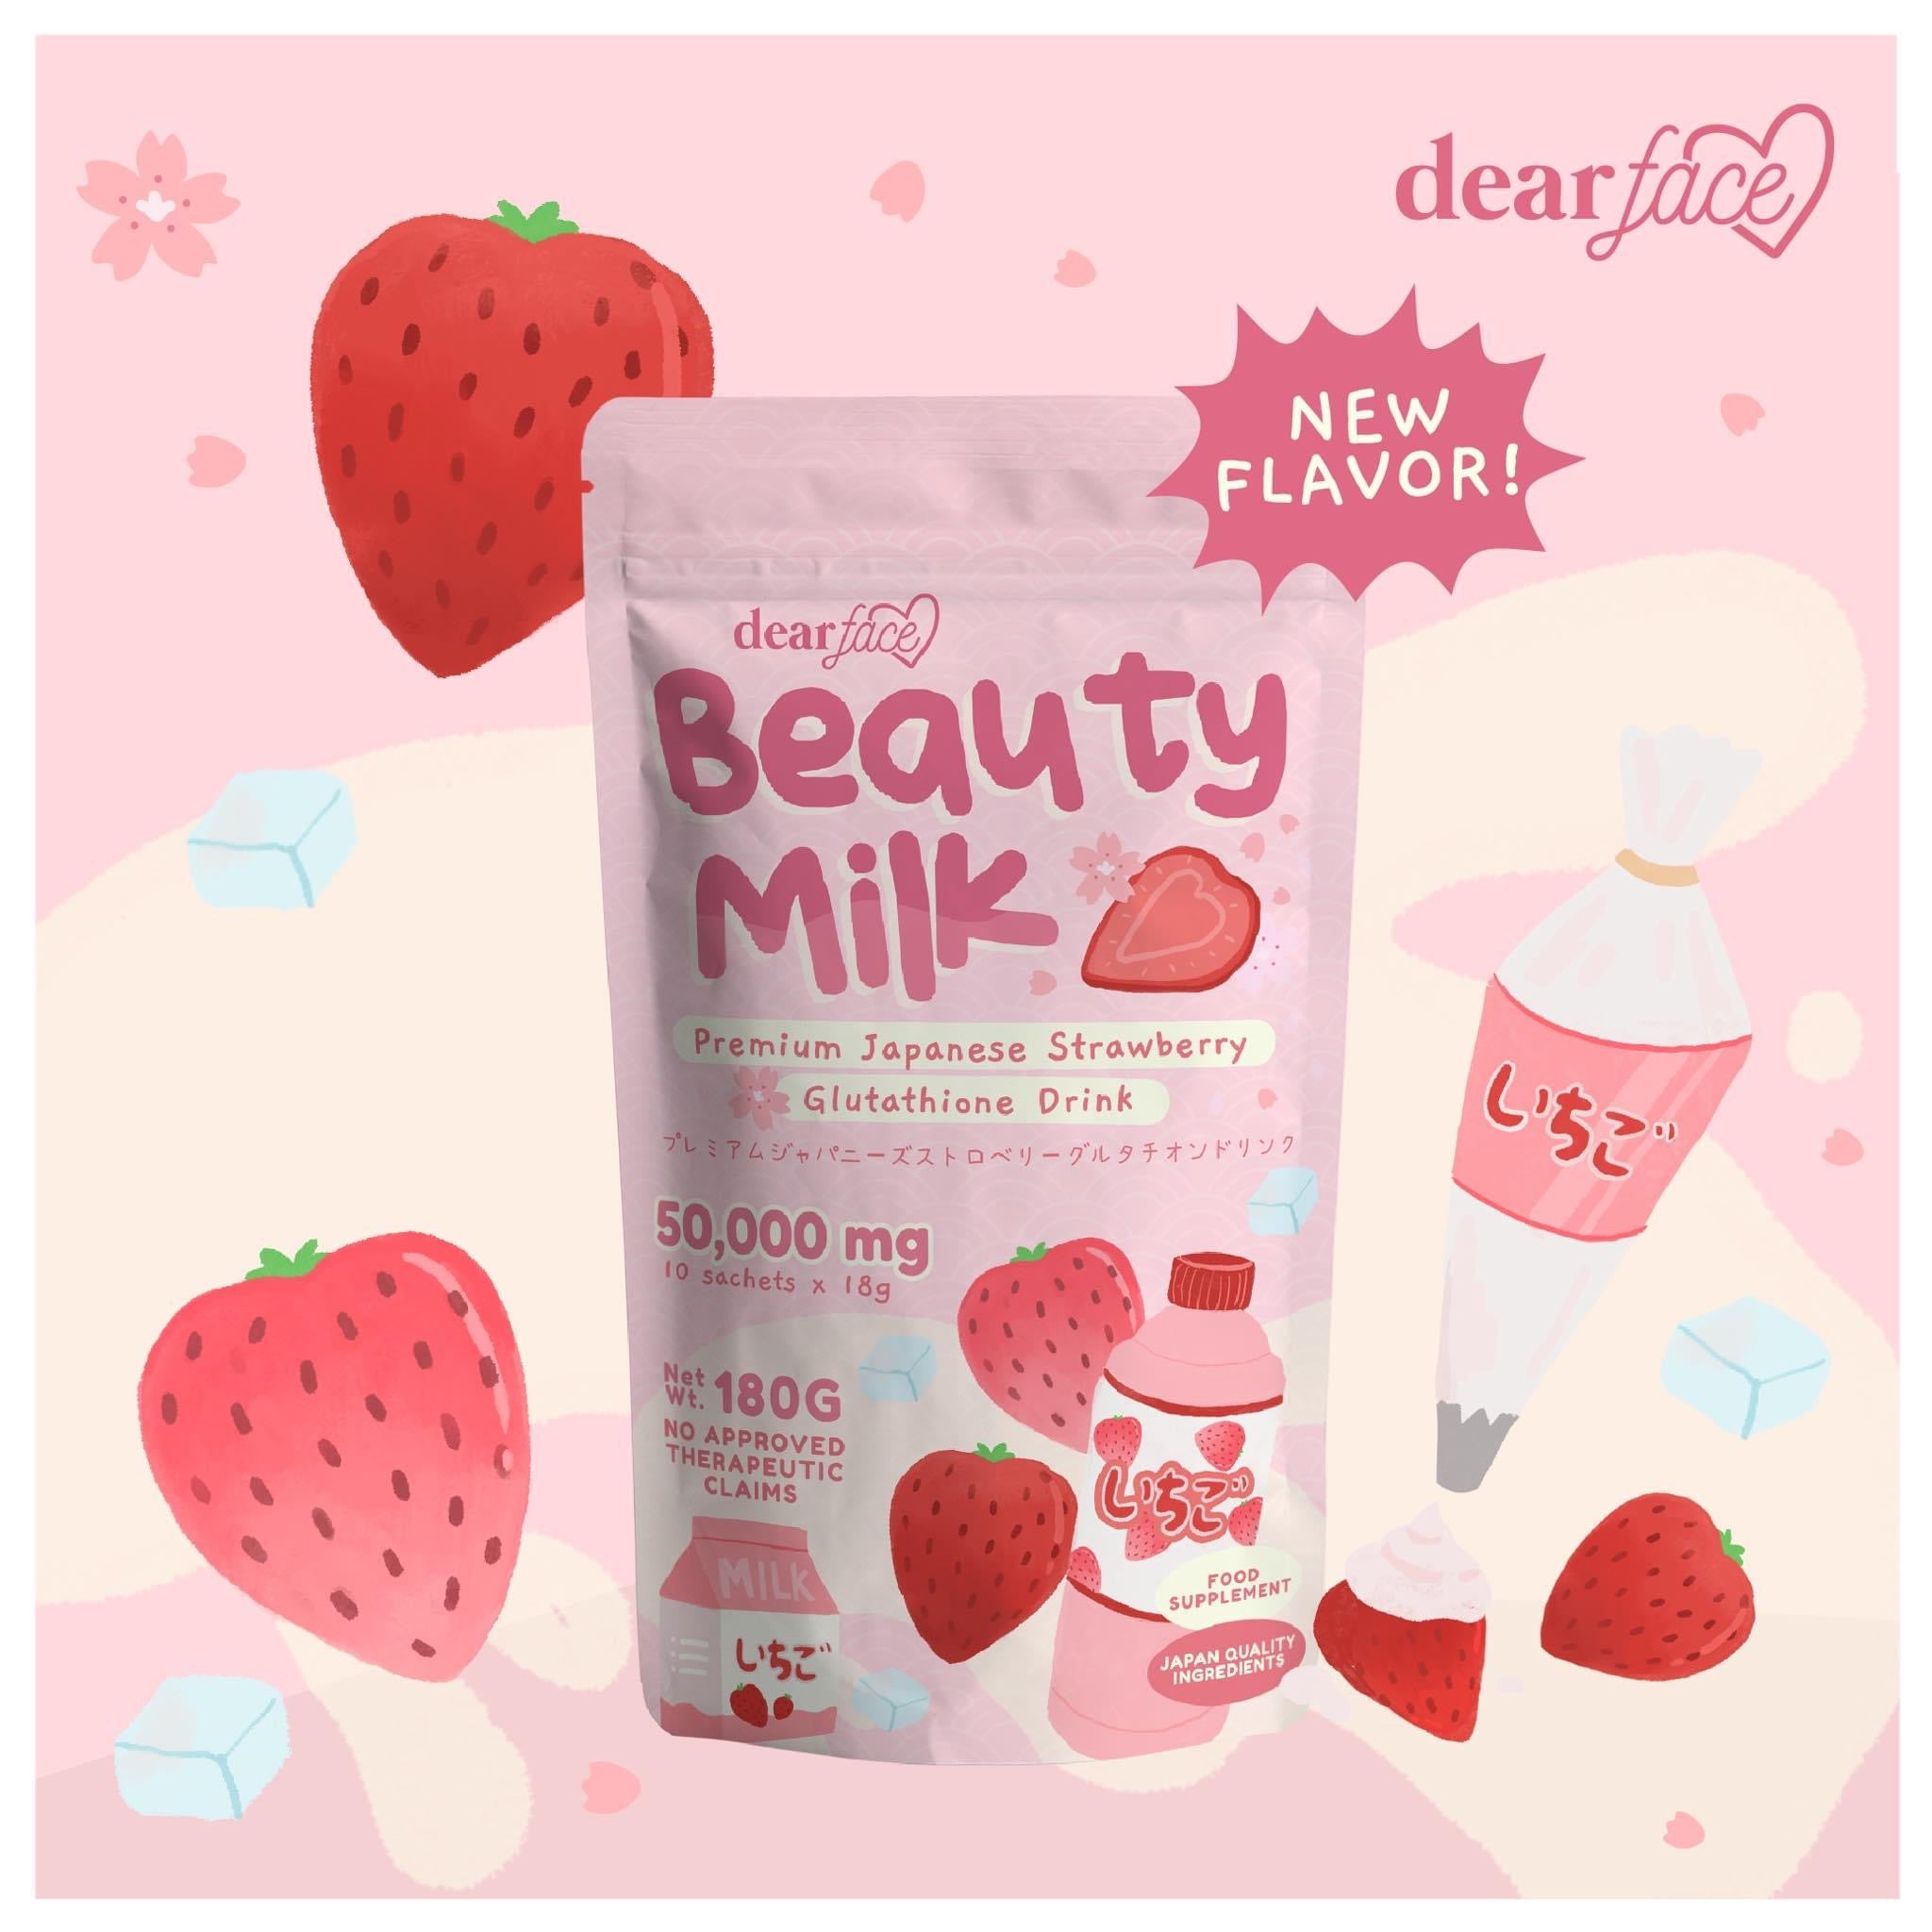 64%OFF!】 SALE Dear Face Beauty Milk Flavors